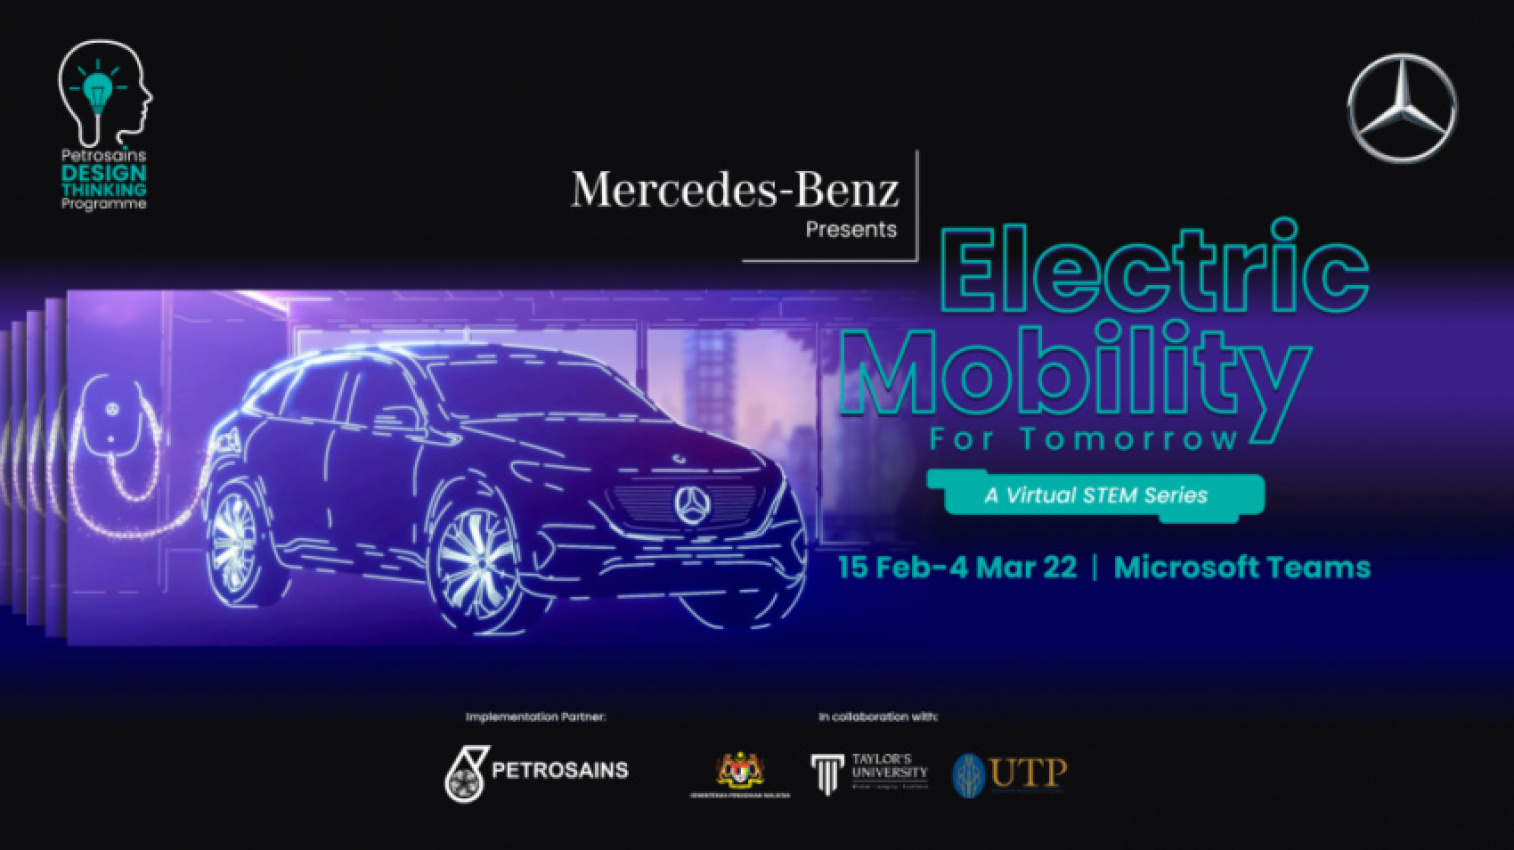 autos, cars, mercedes-benz, autos mercedes-benz, mercedes, mercedes-benz malaysia and petrosains launch virtual stem series